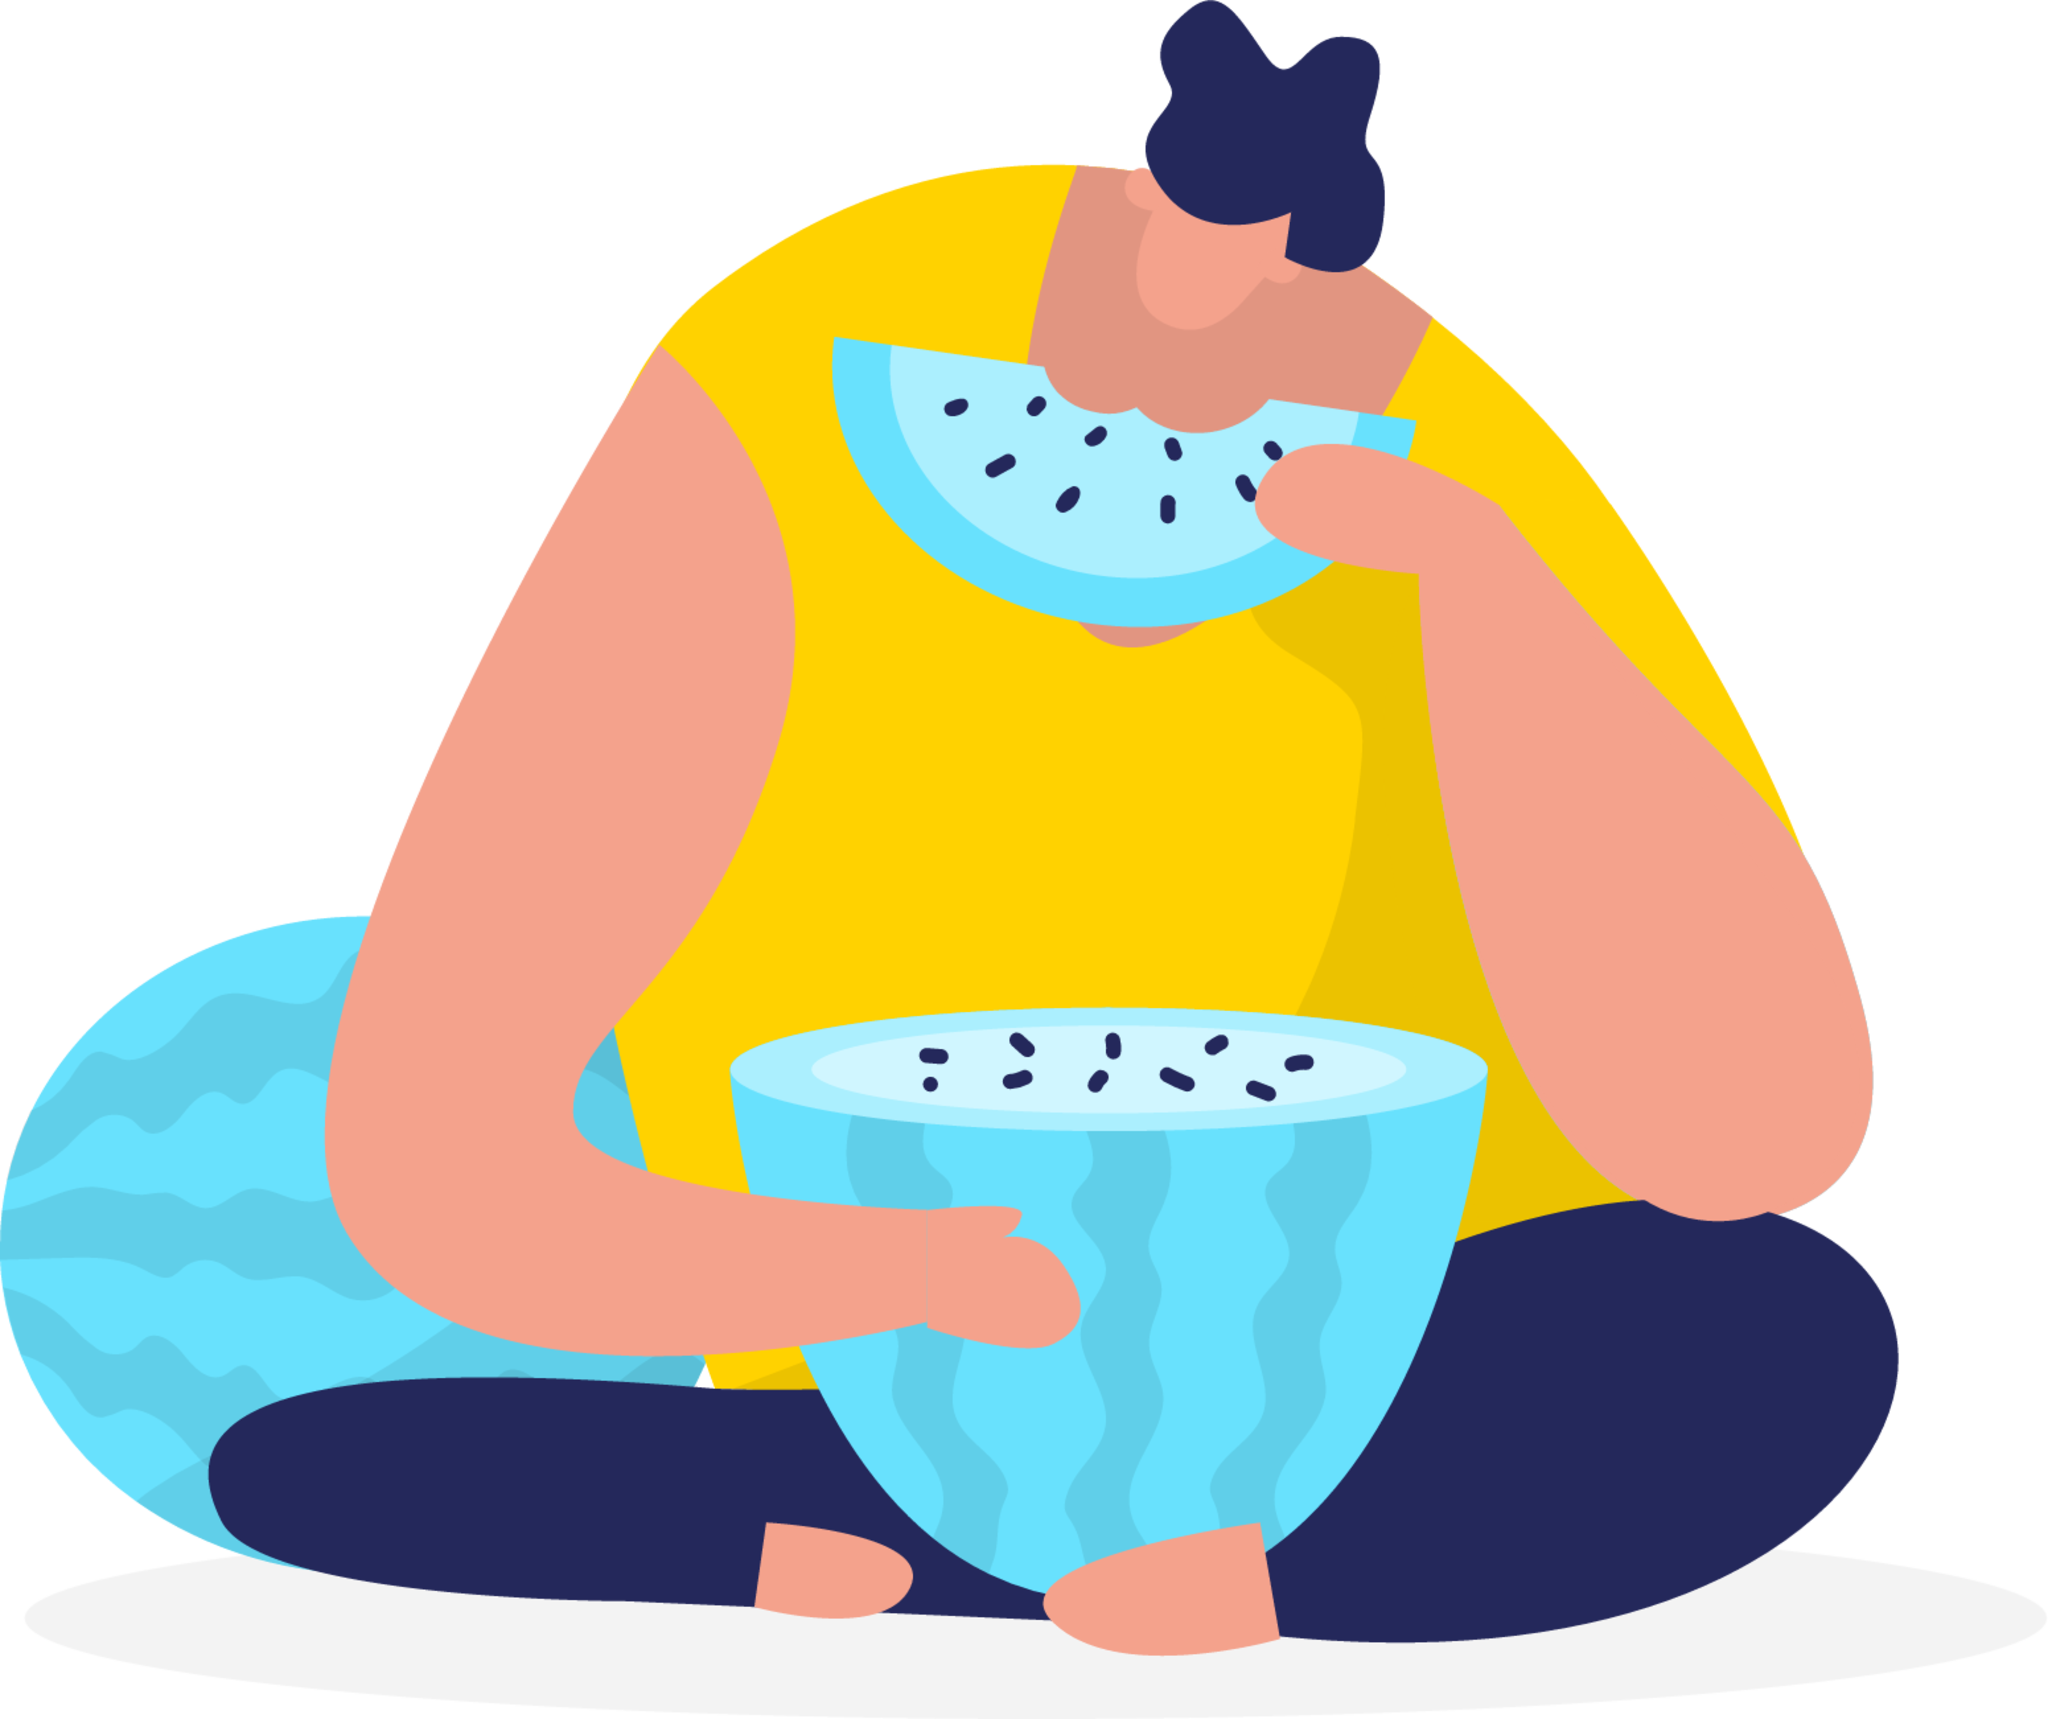 Watermelon illustration